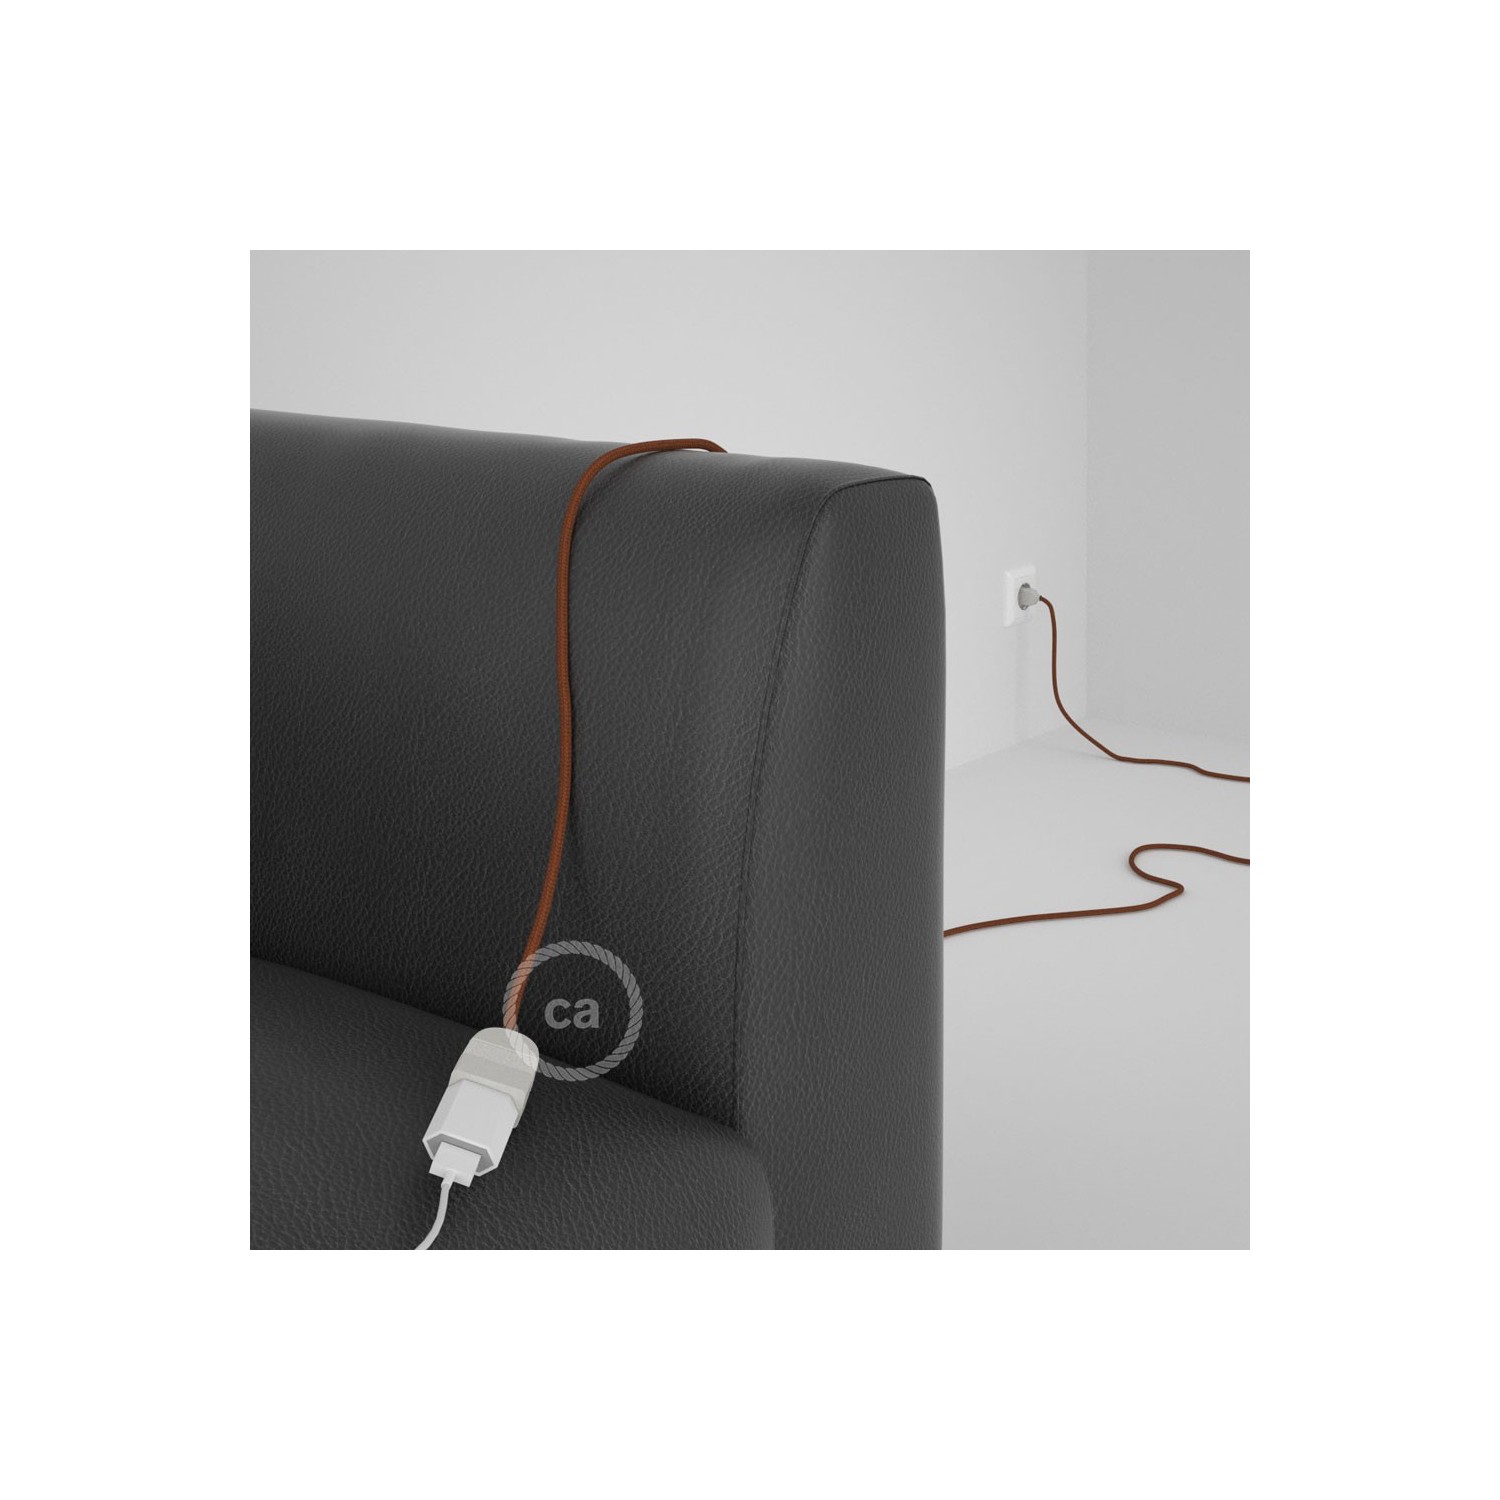 Rallonge électrique avec câble textile RC23 Coton Daim 2P 10A Made in Italy.